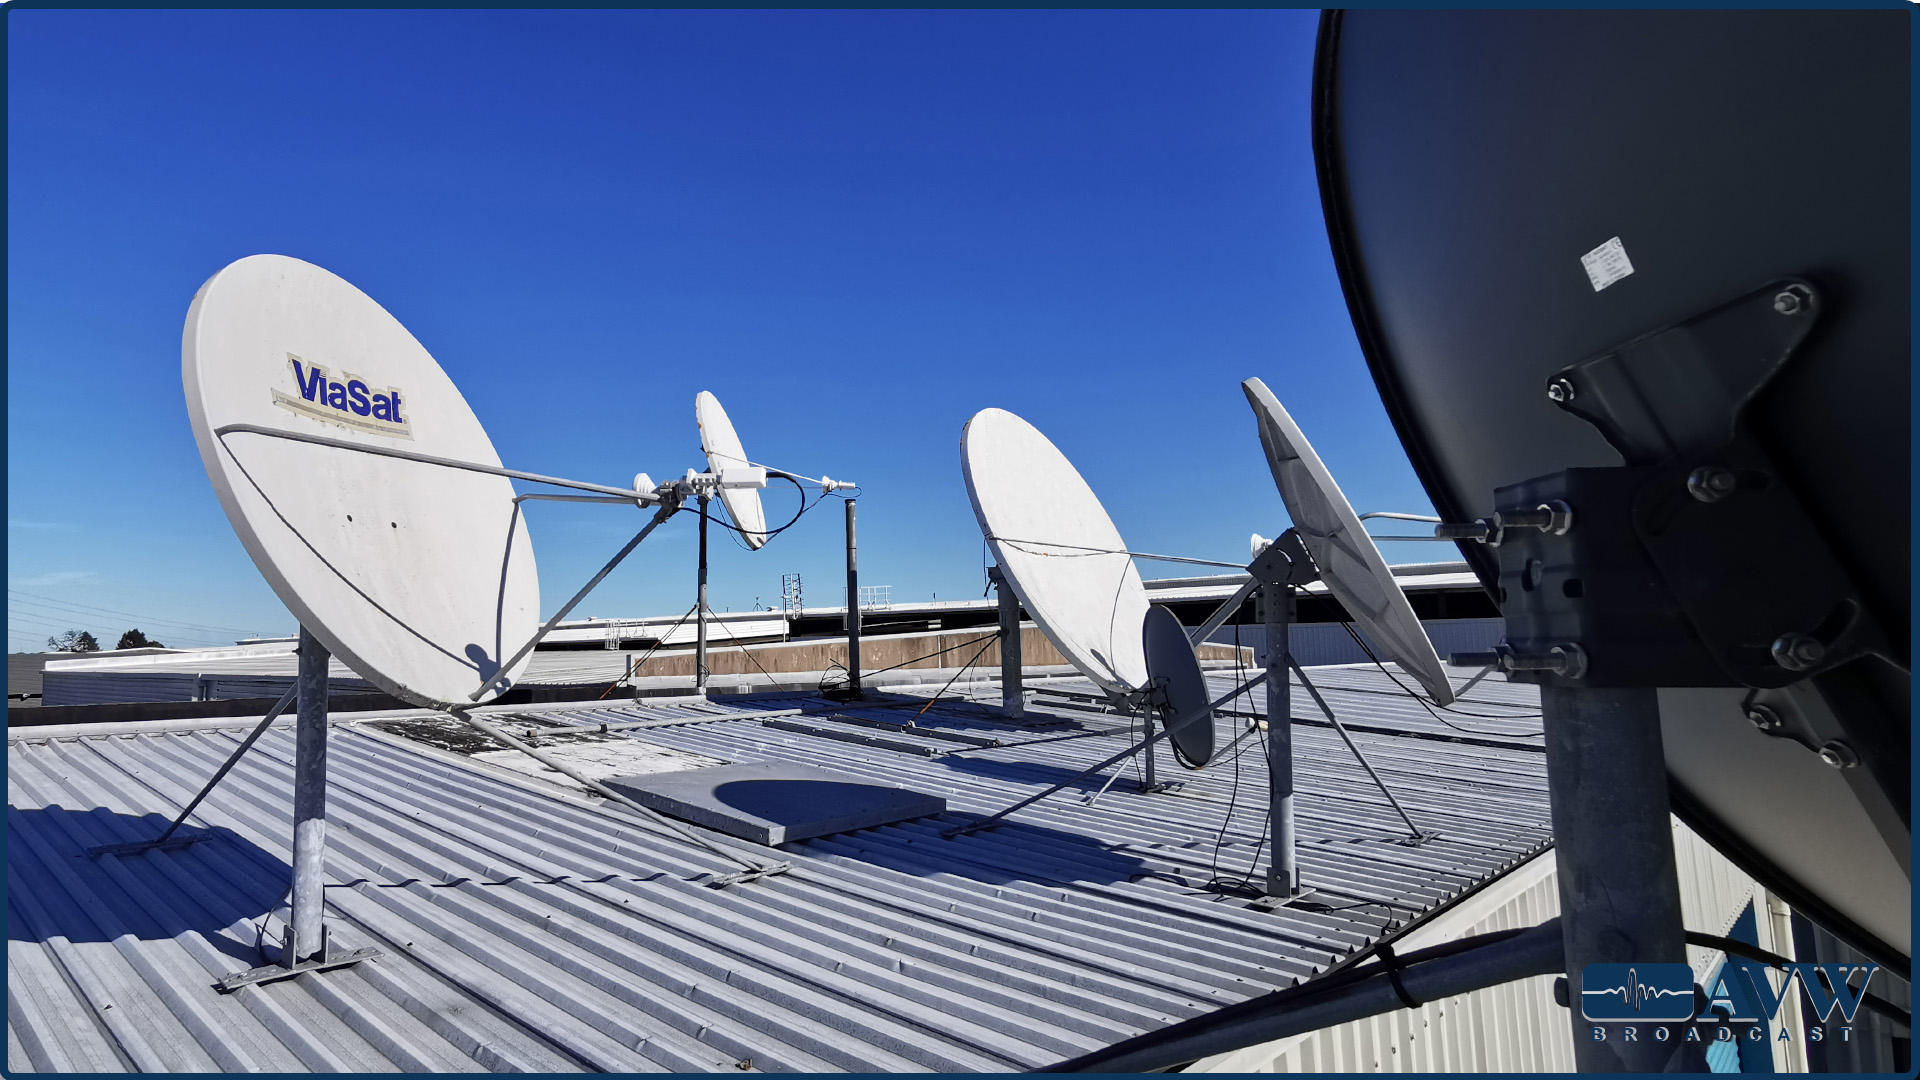 AVW Earth Station Antenna